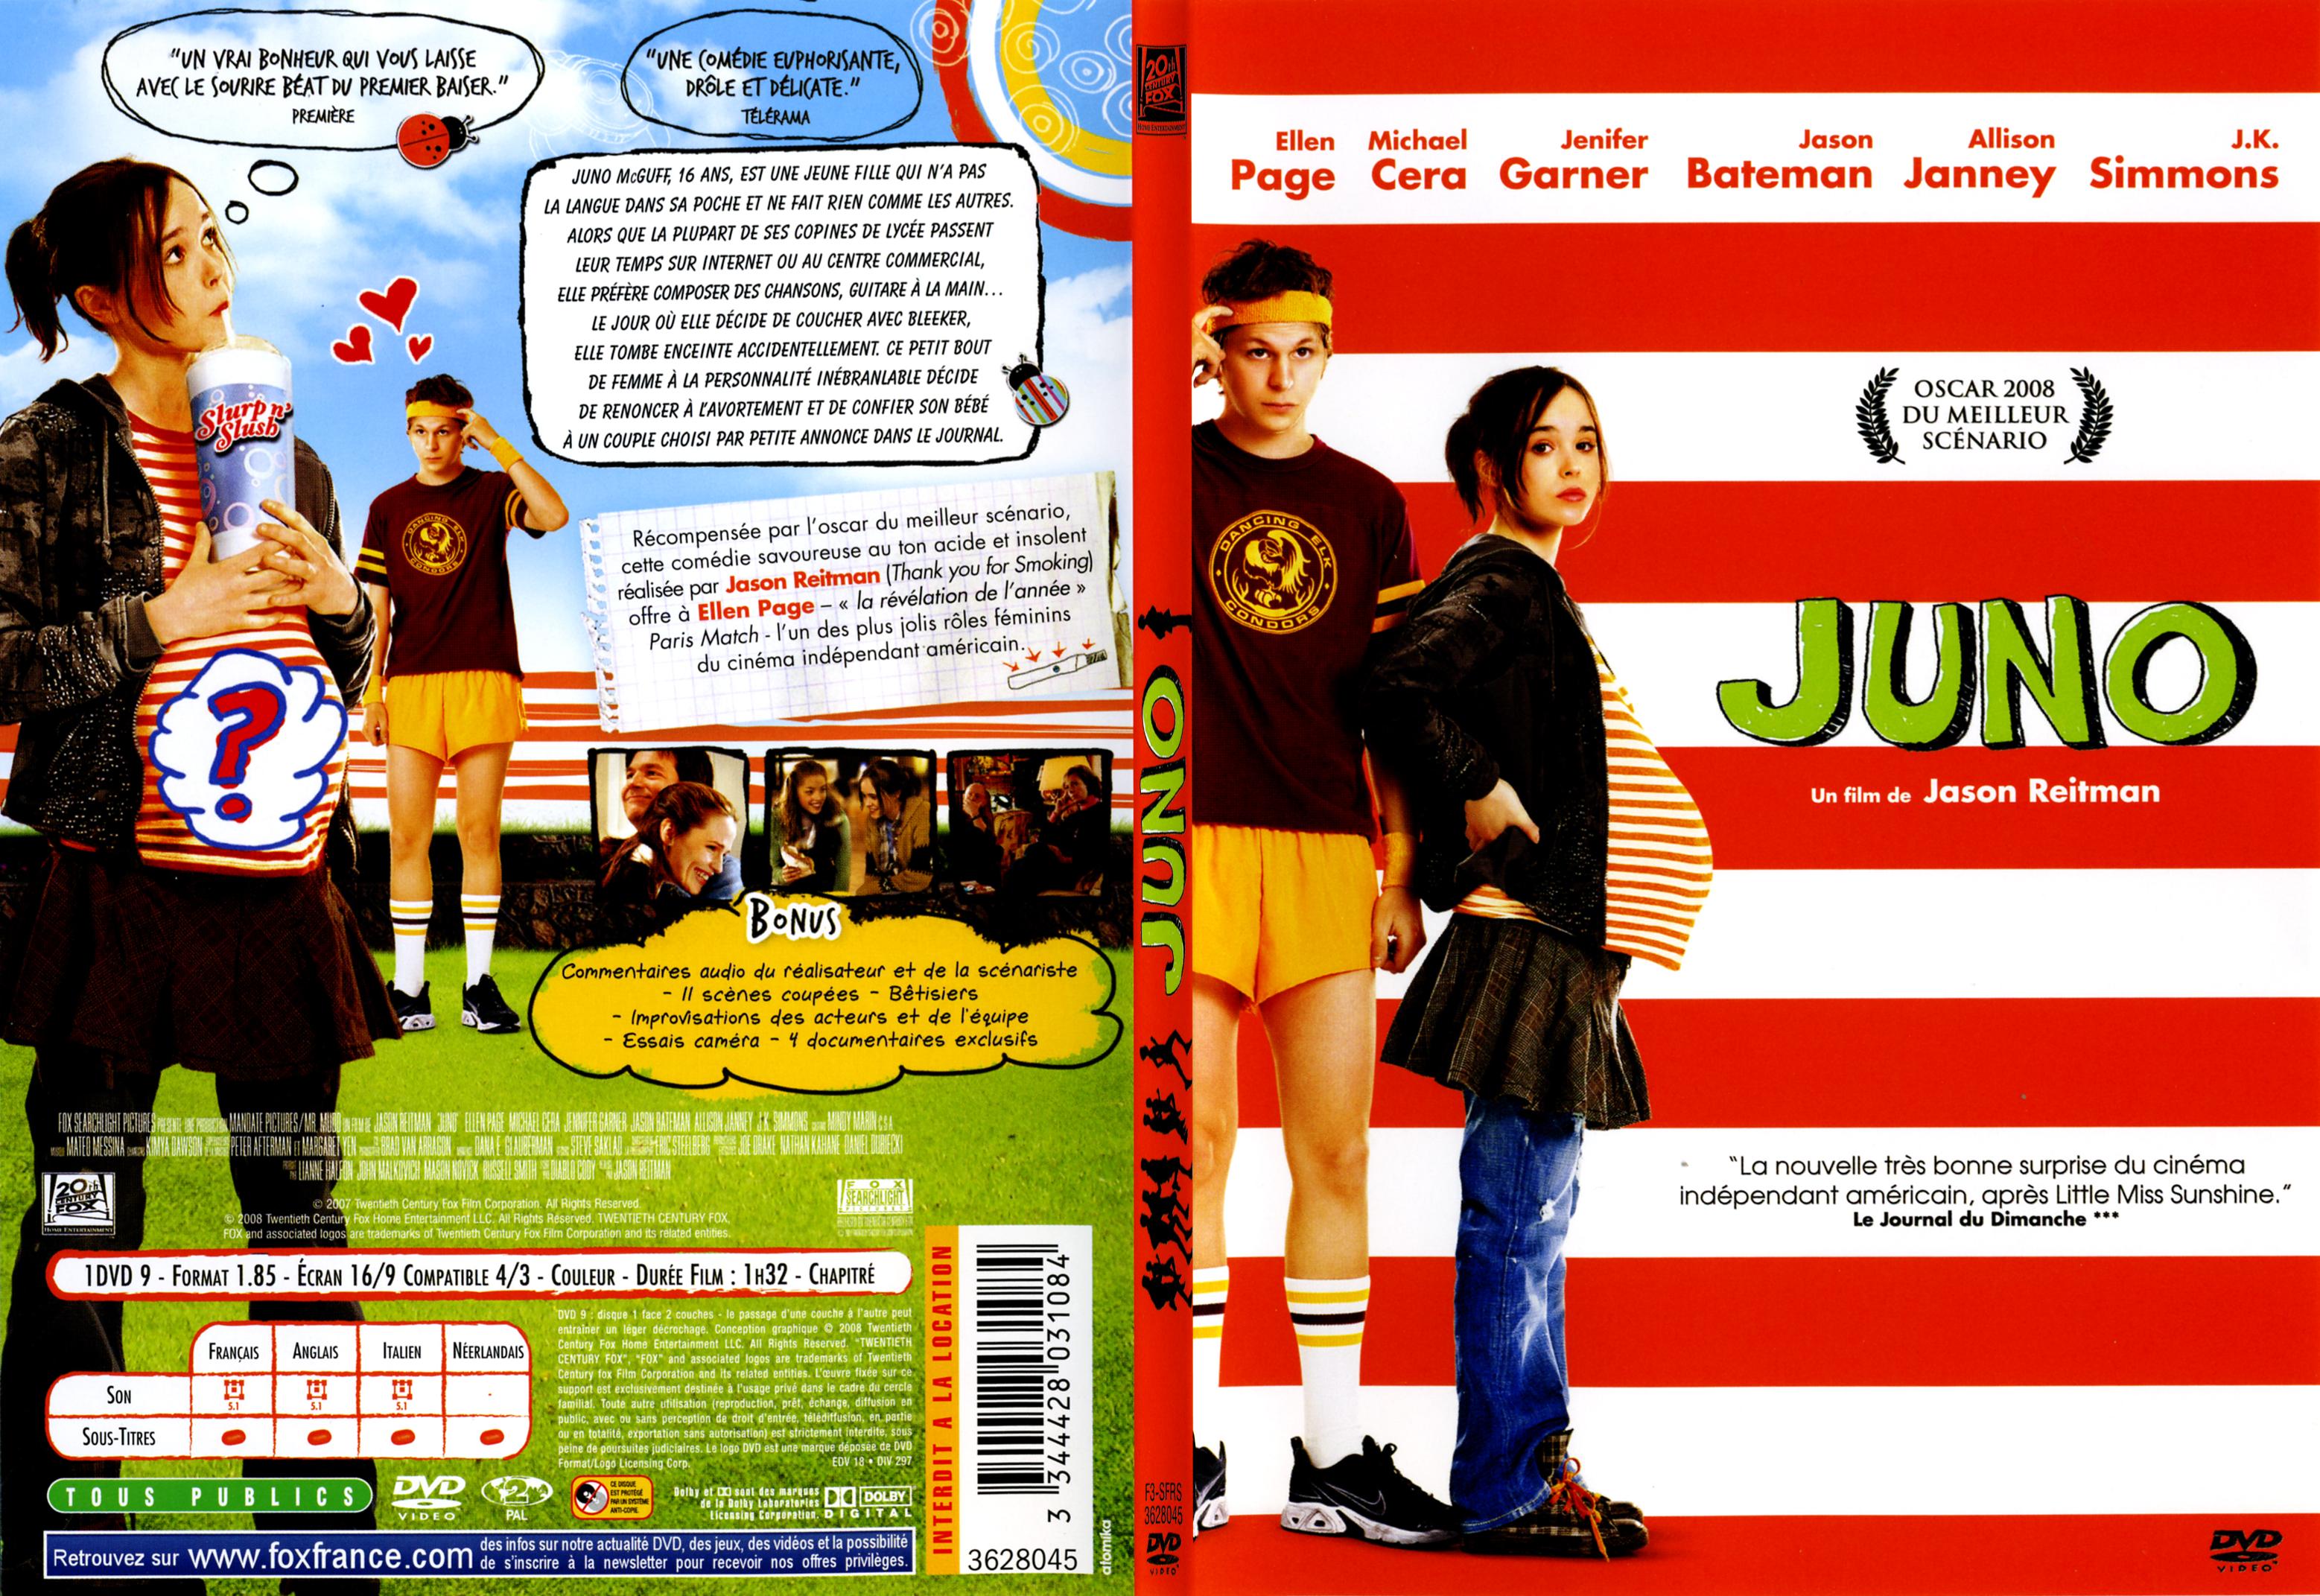 Jaquette DVD Juno - SLIM